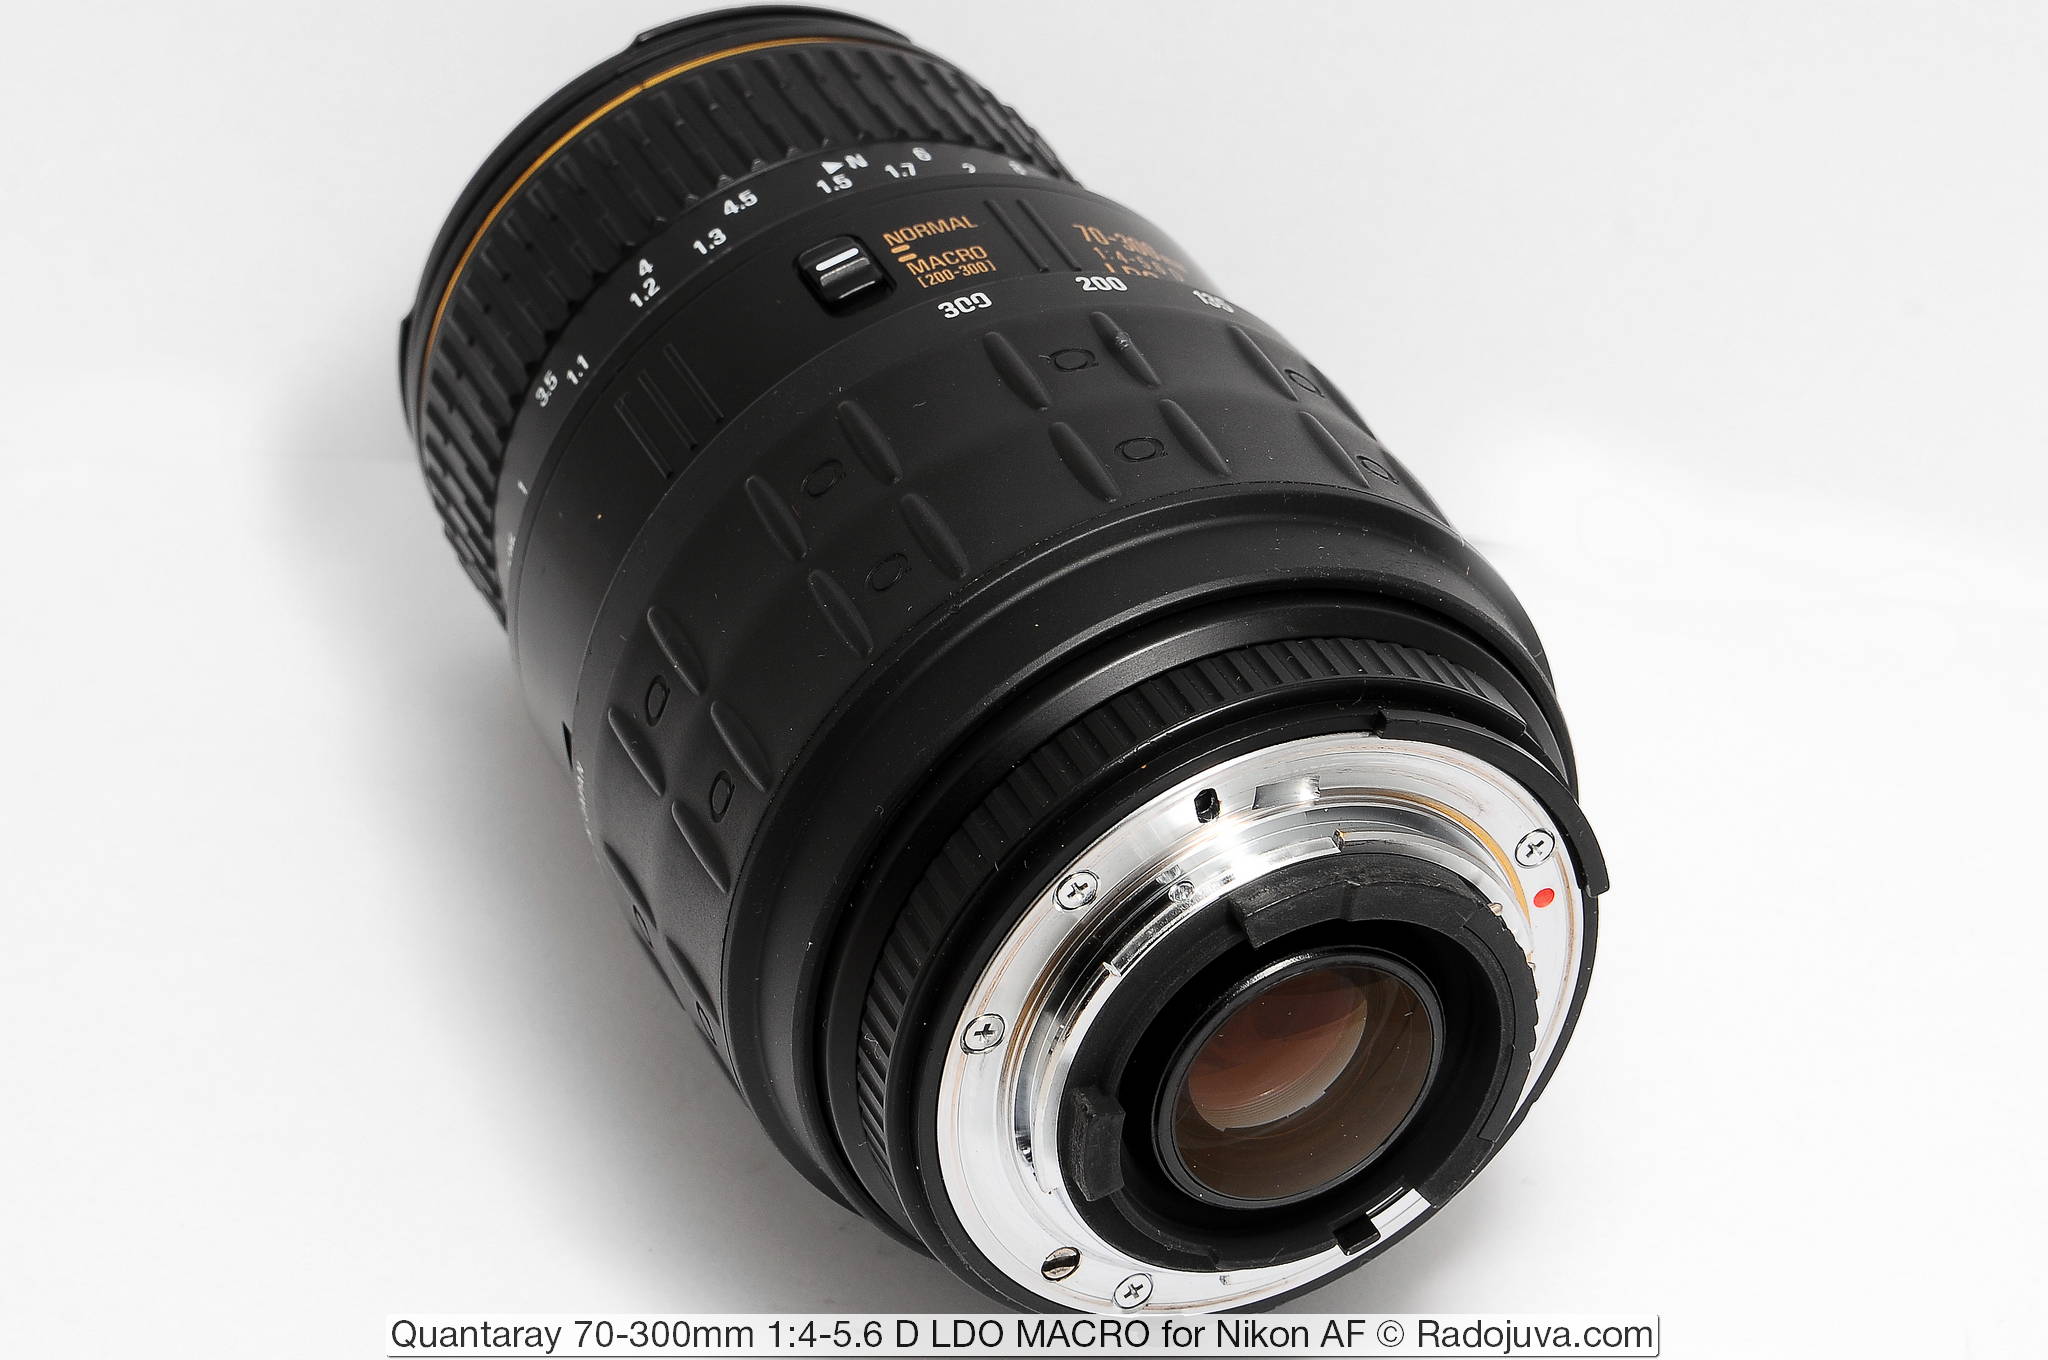  Quantaray 70-300mm 1:4-5.6 D LDO MACRO for Nikon AF, MACRO (200-300)